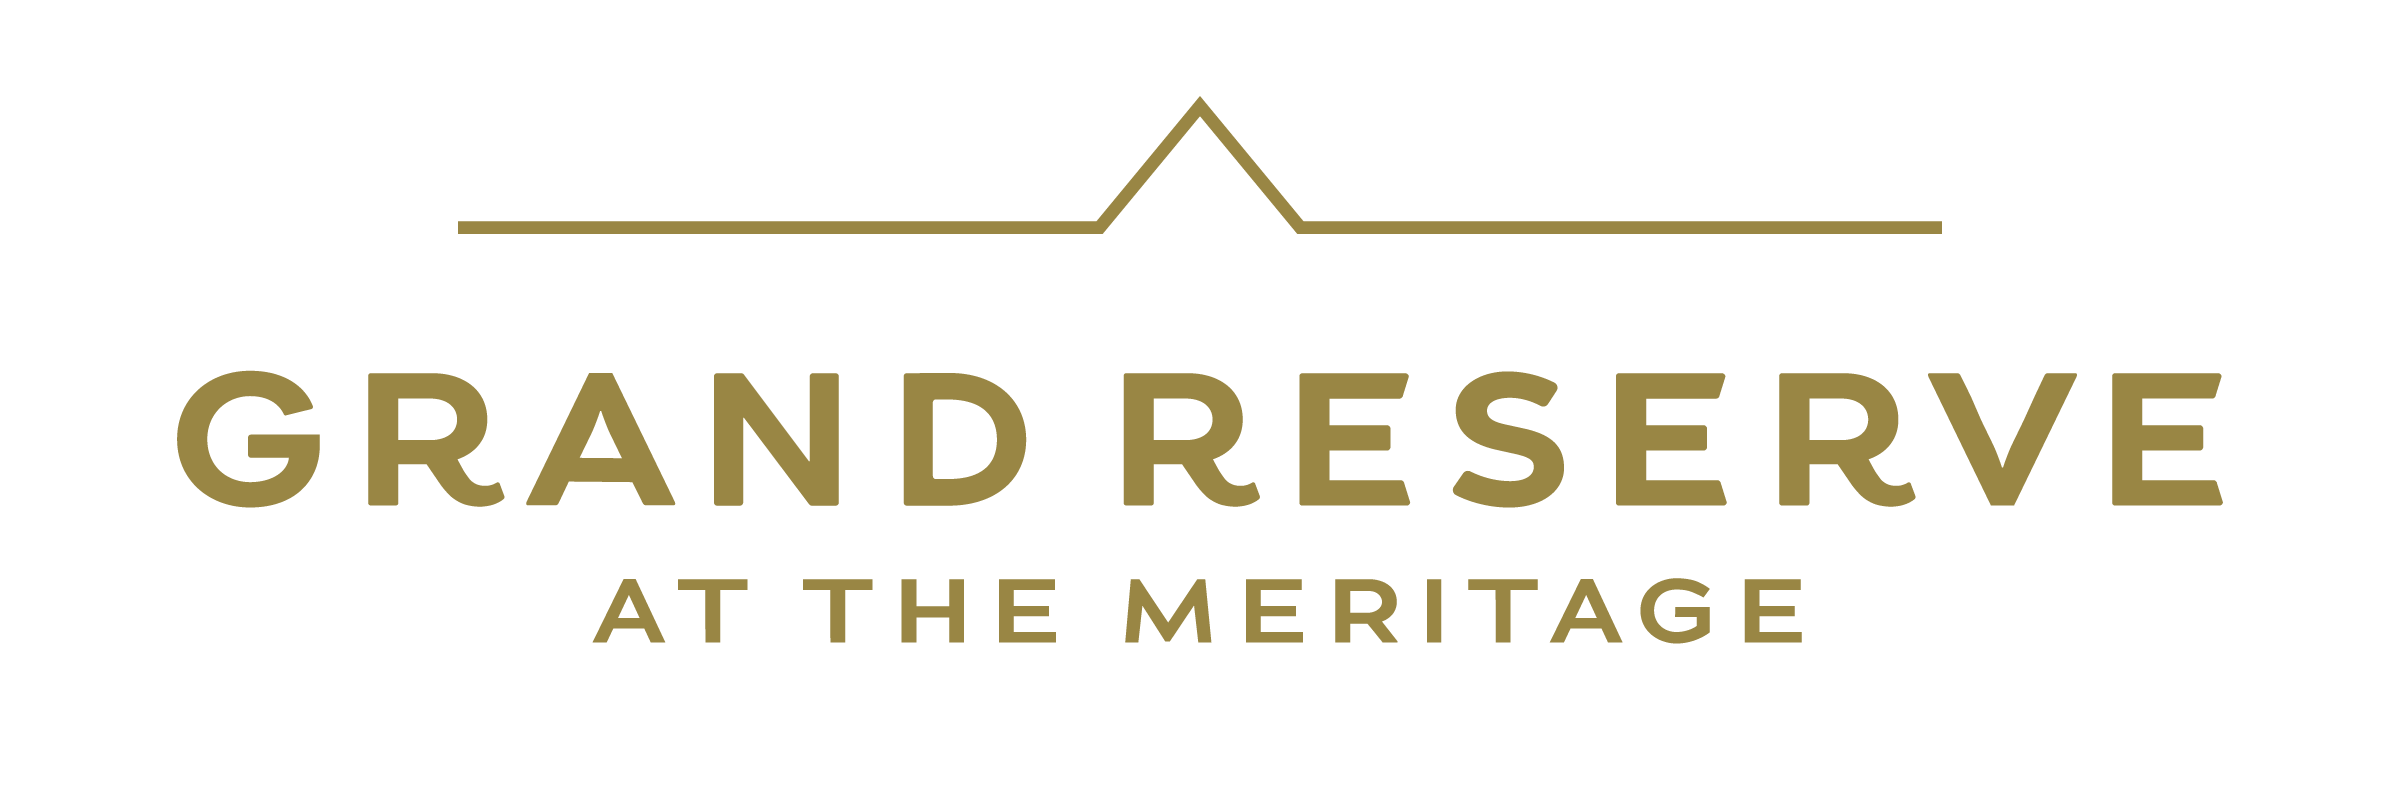 Grand Reserve at The Meritage logo